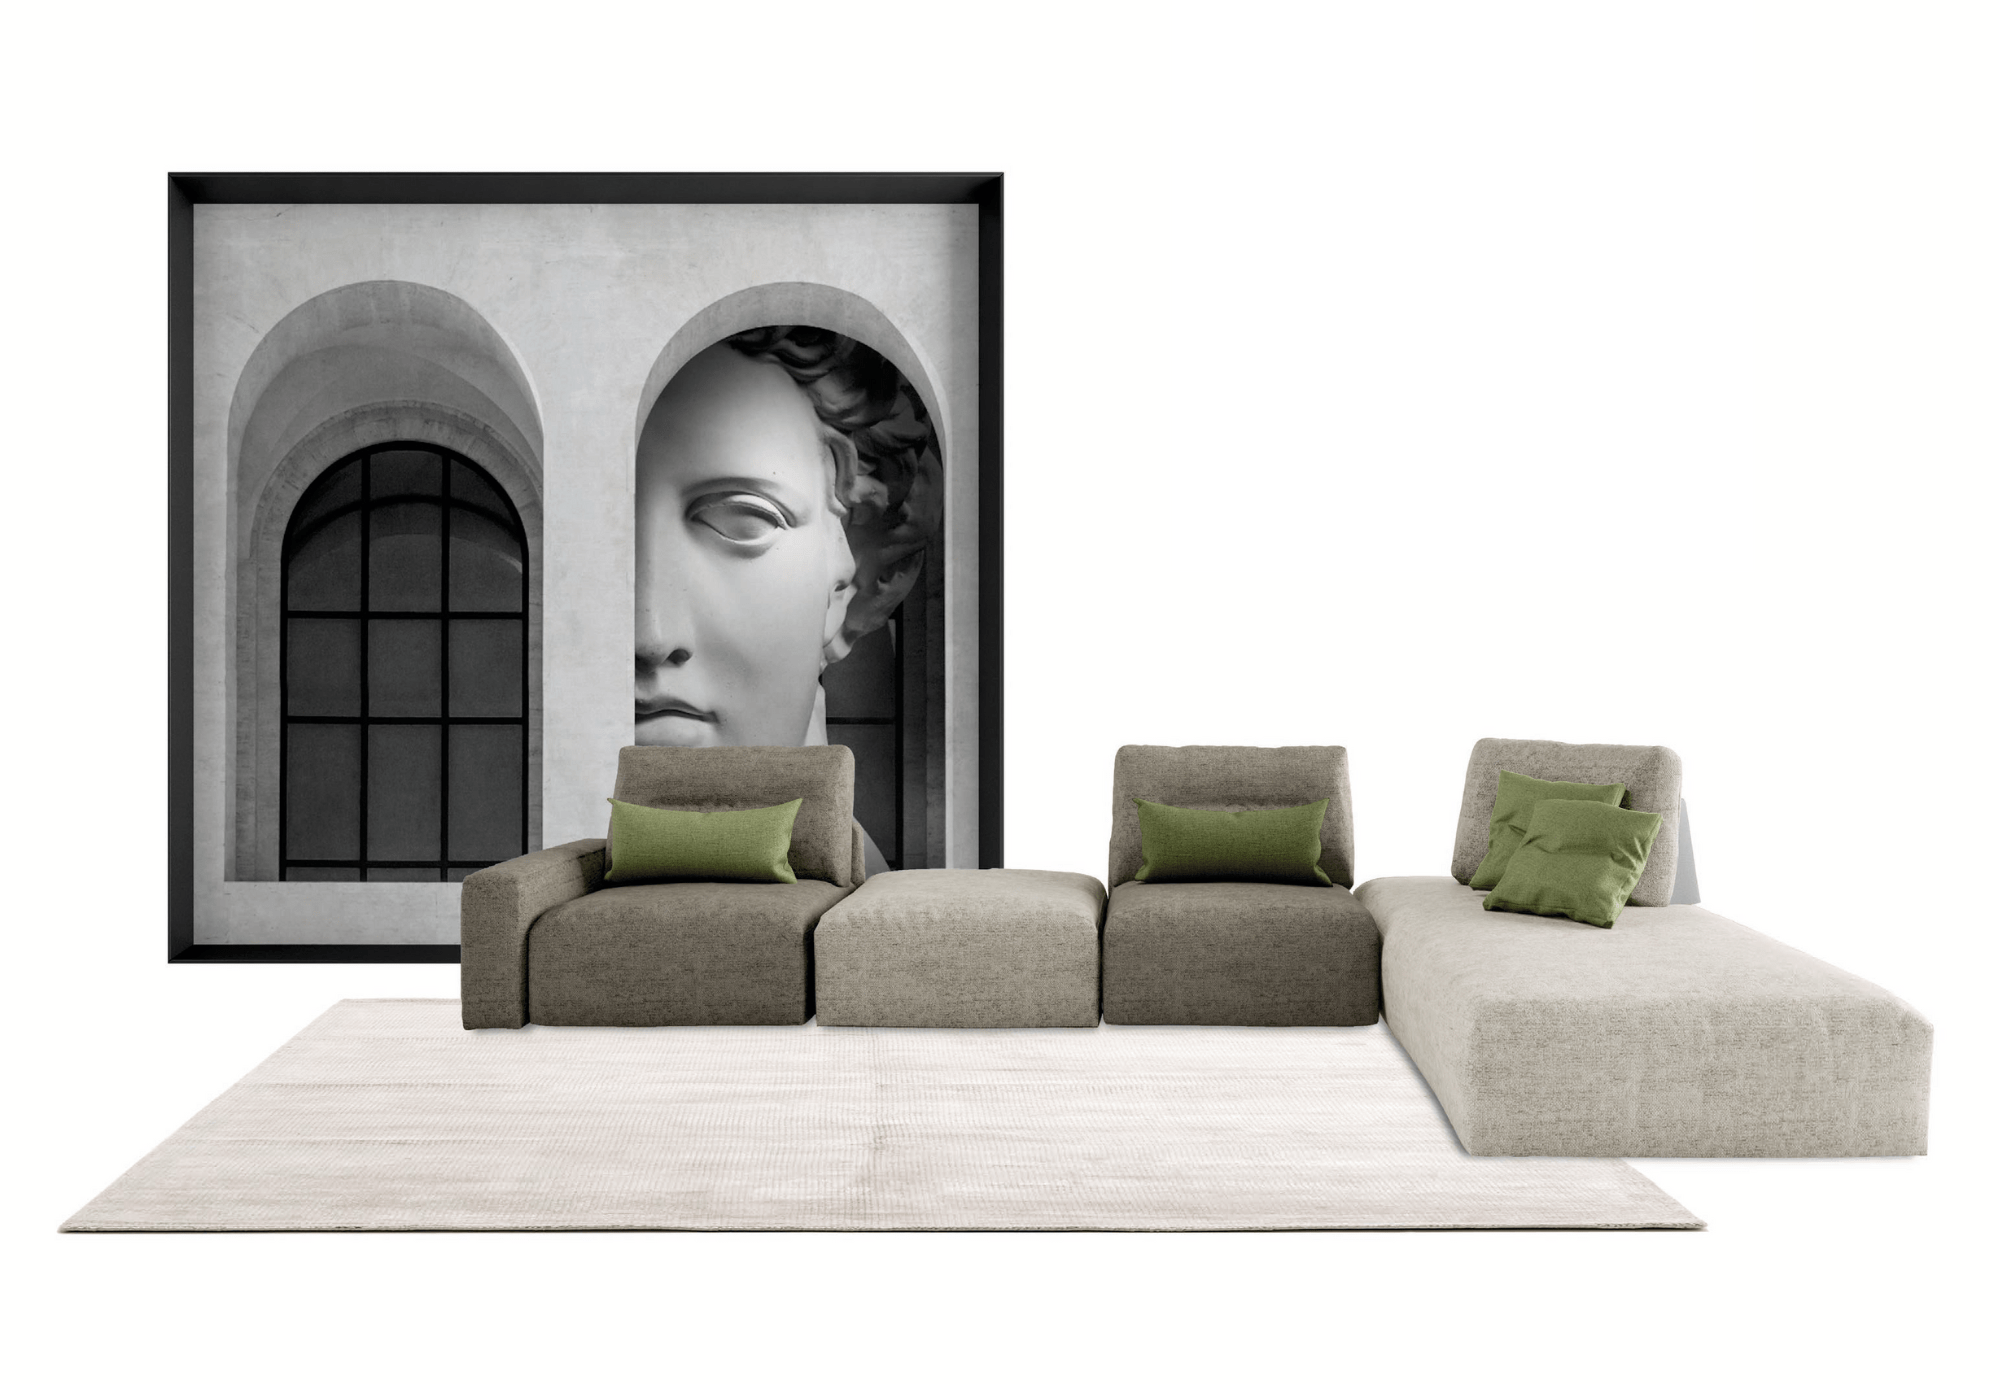 Beautiful Luxury Sectional Sofa